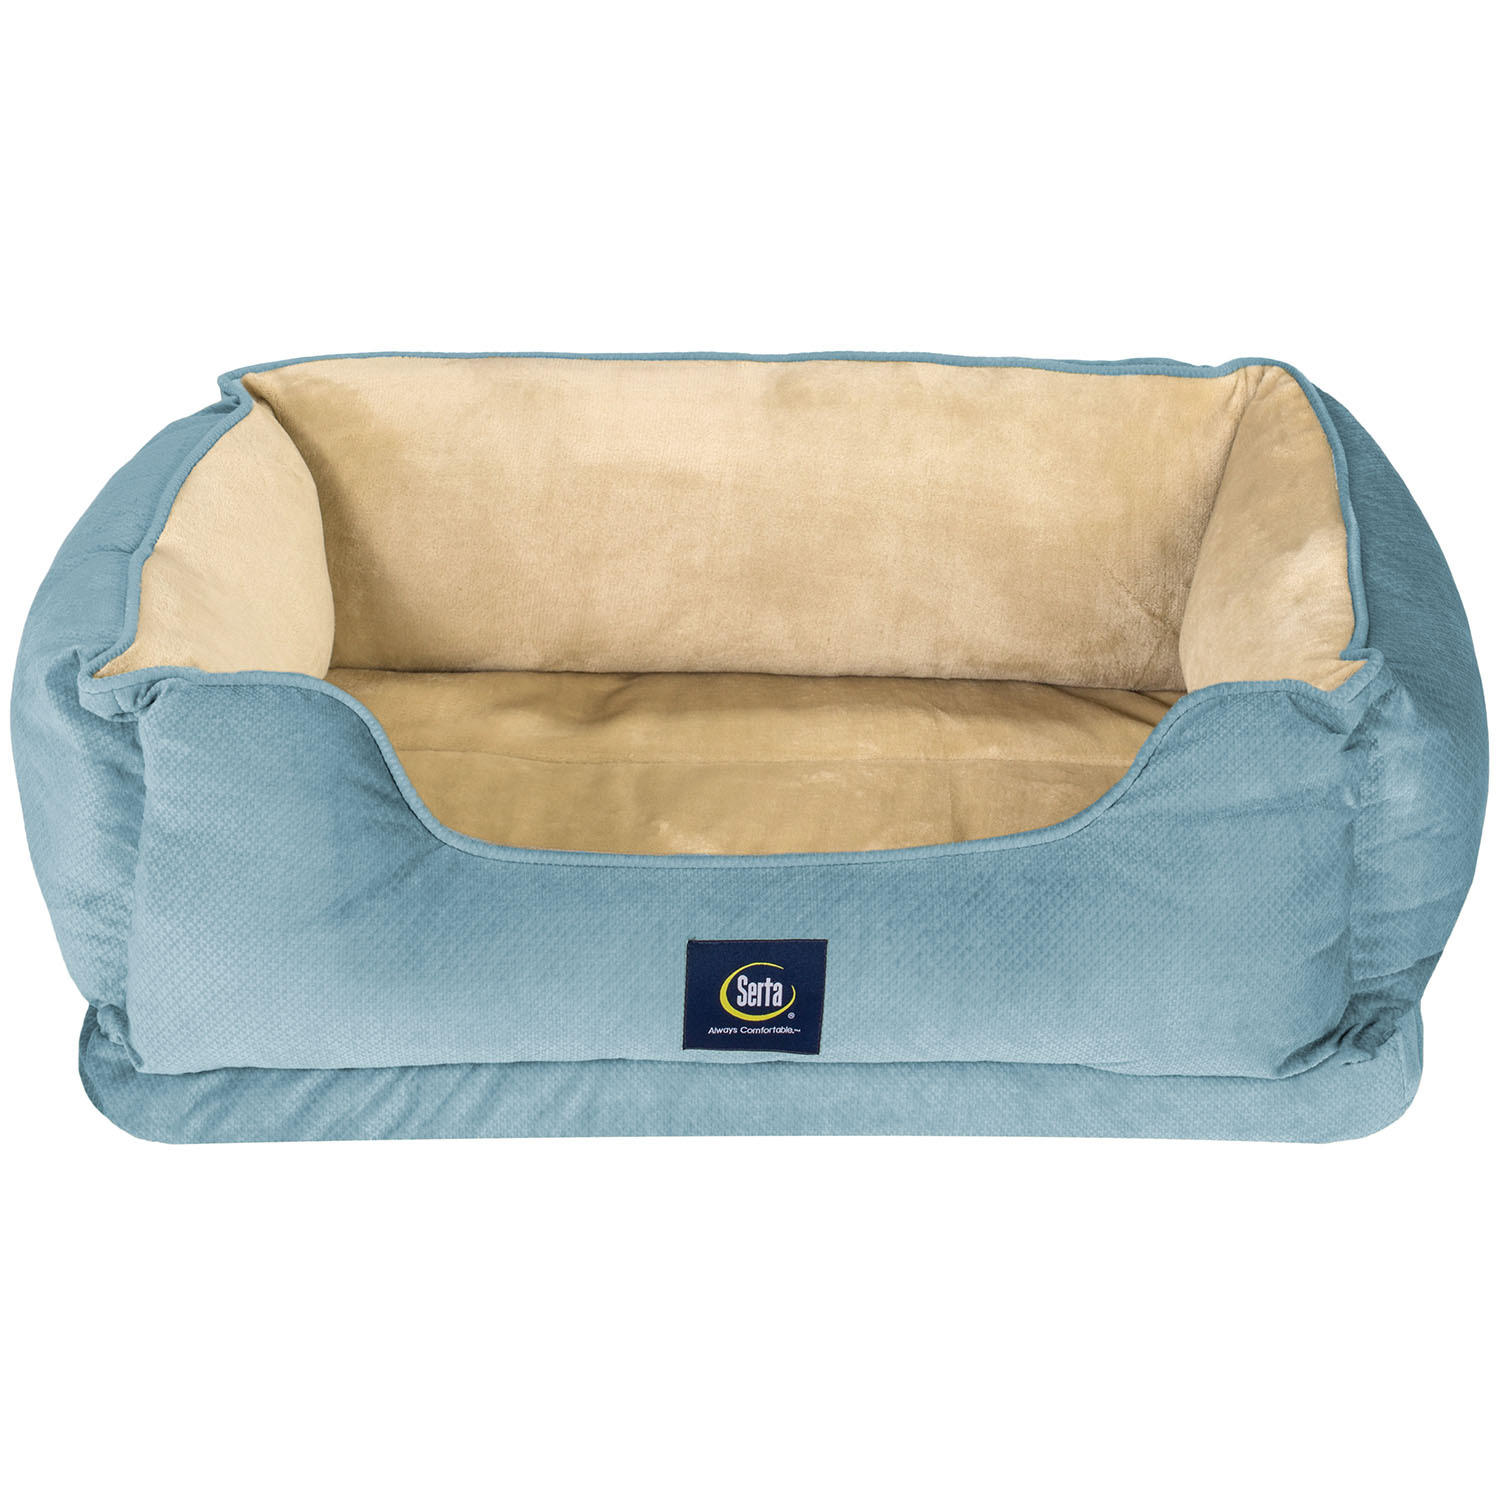 Serta Perfect Sleeper Orthopedic Cuddler Pet Bed, 34' x 24' (Light Blue)